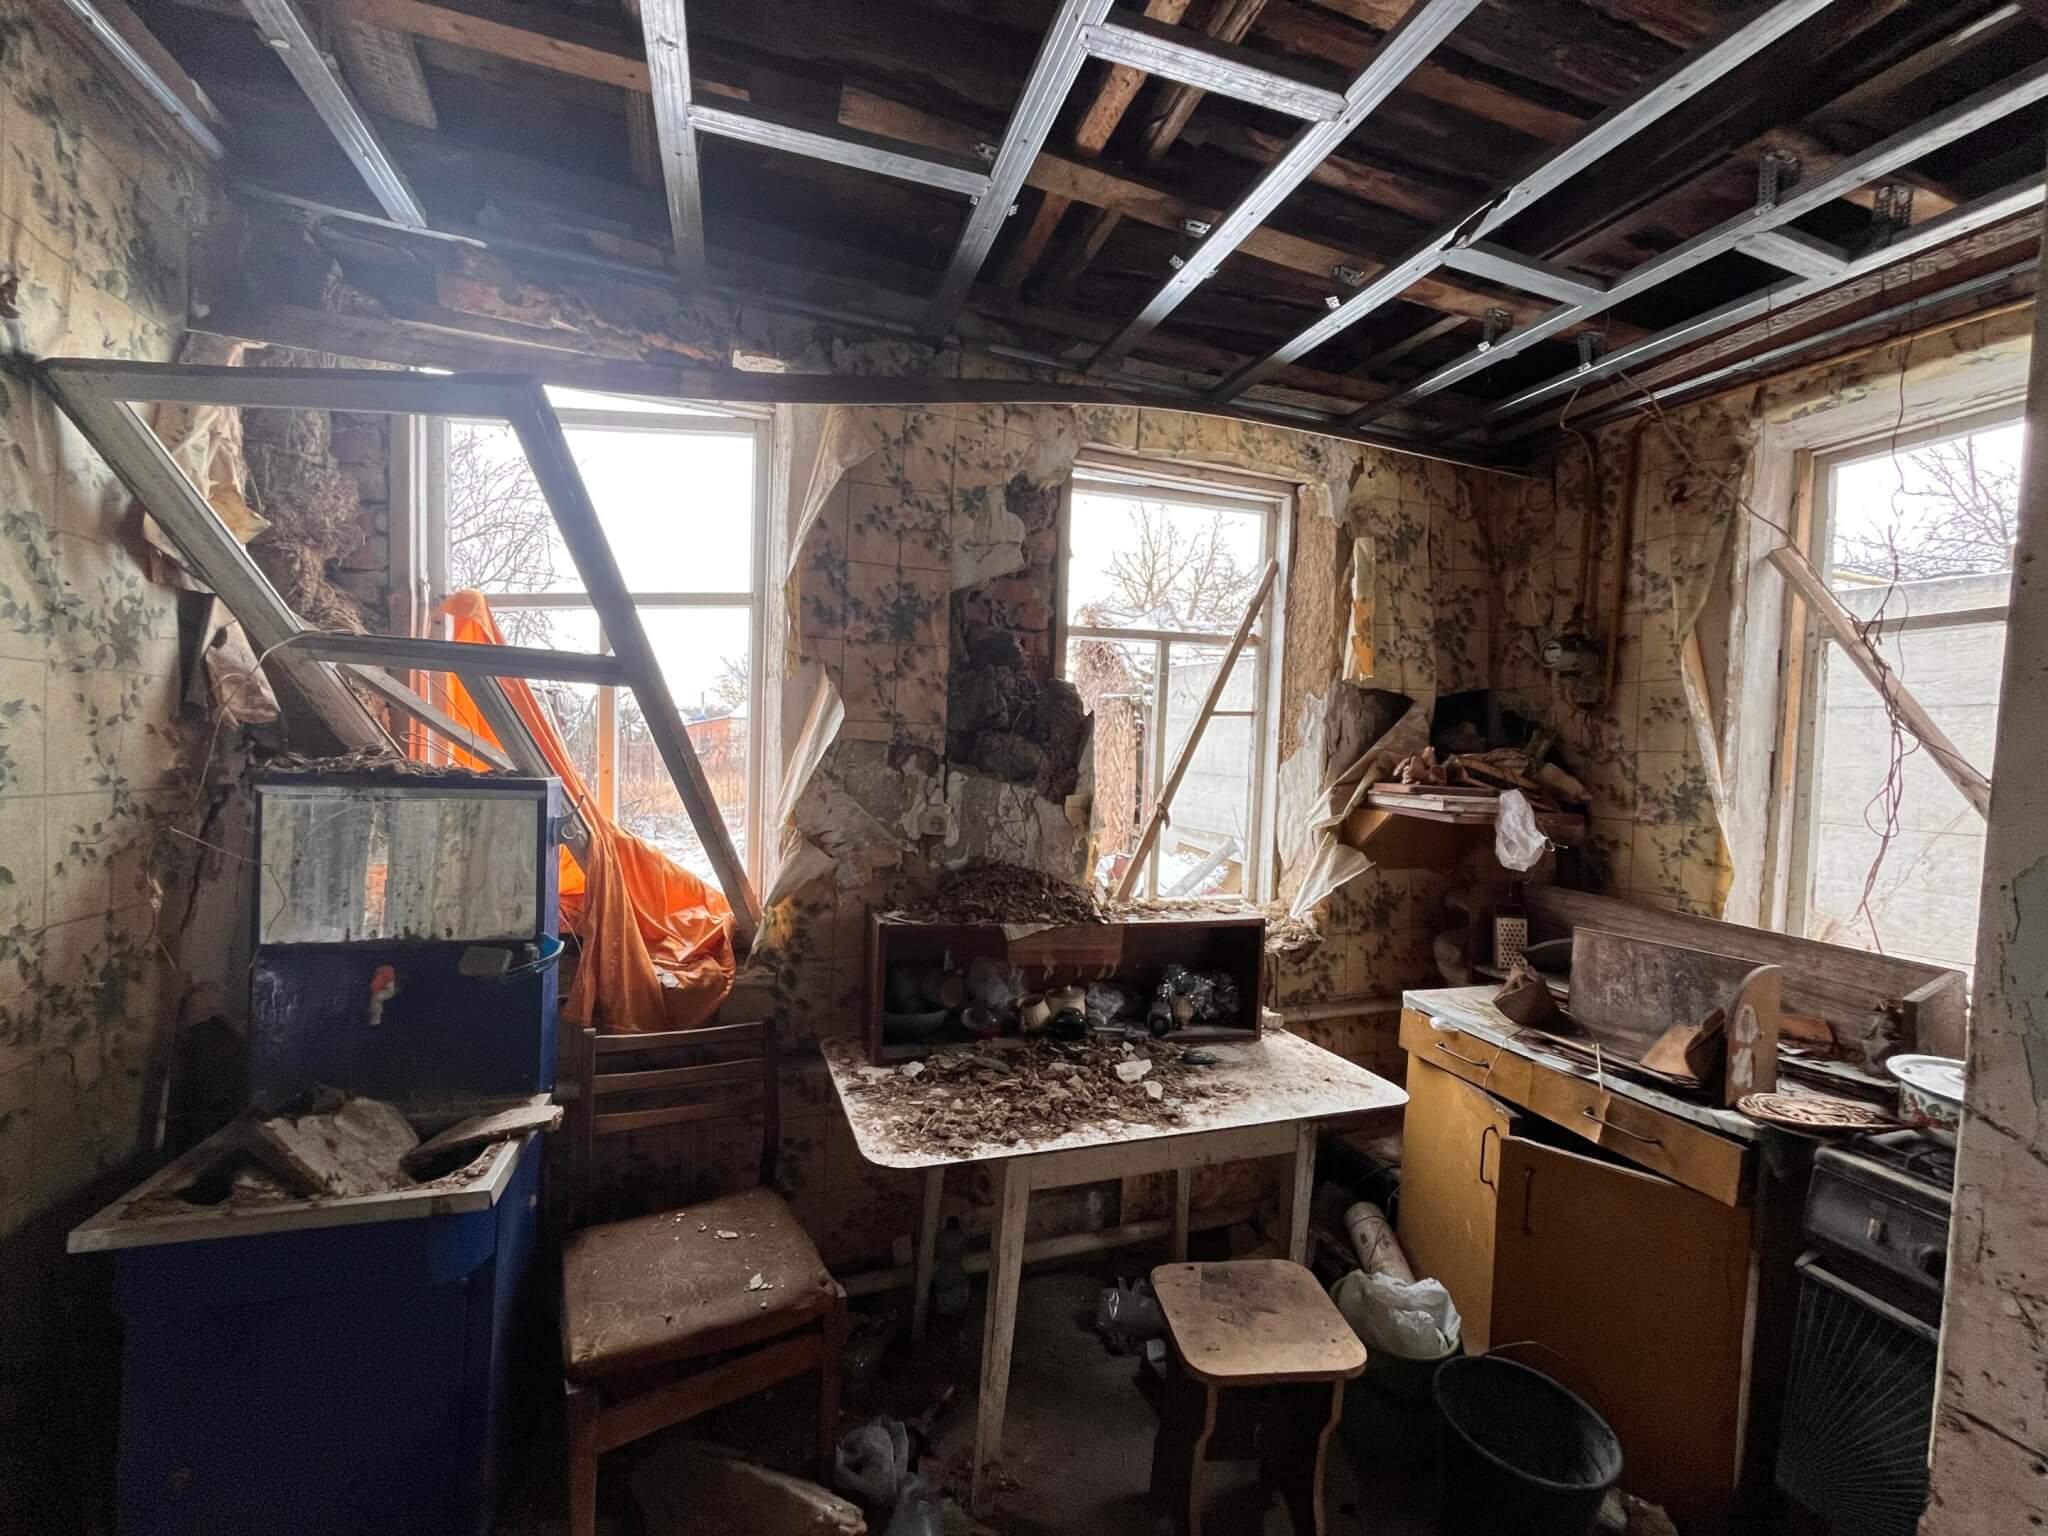 shelling damage has destroyed house interiors in ukraine